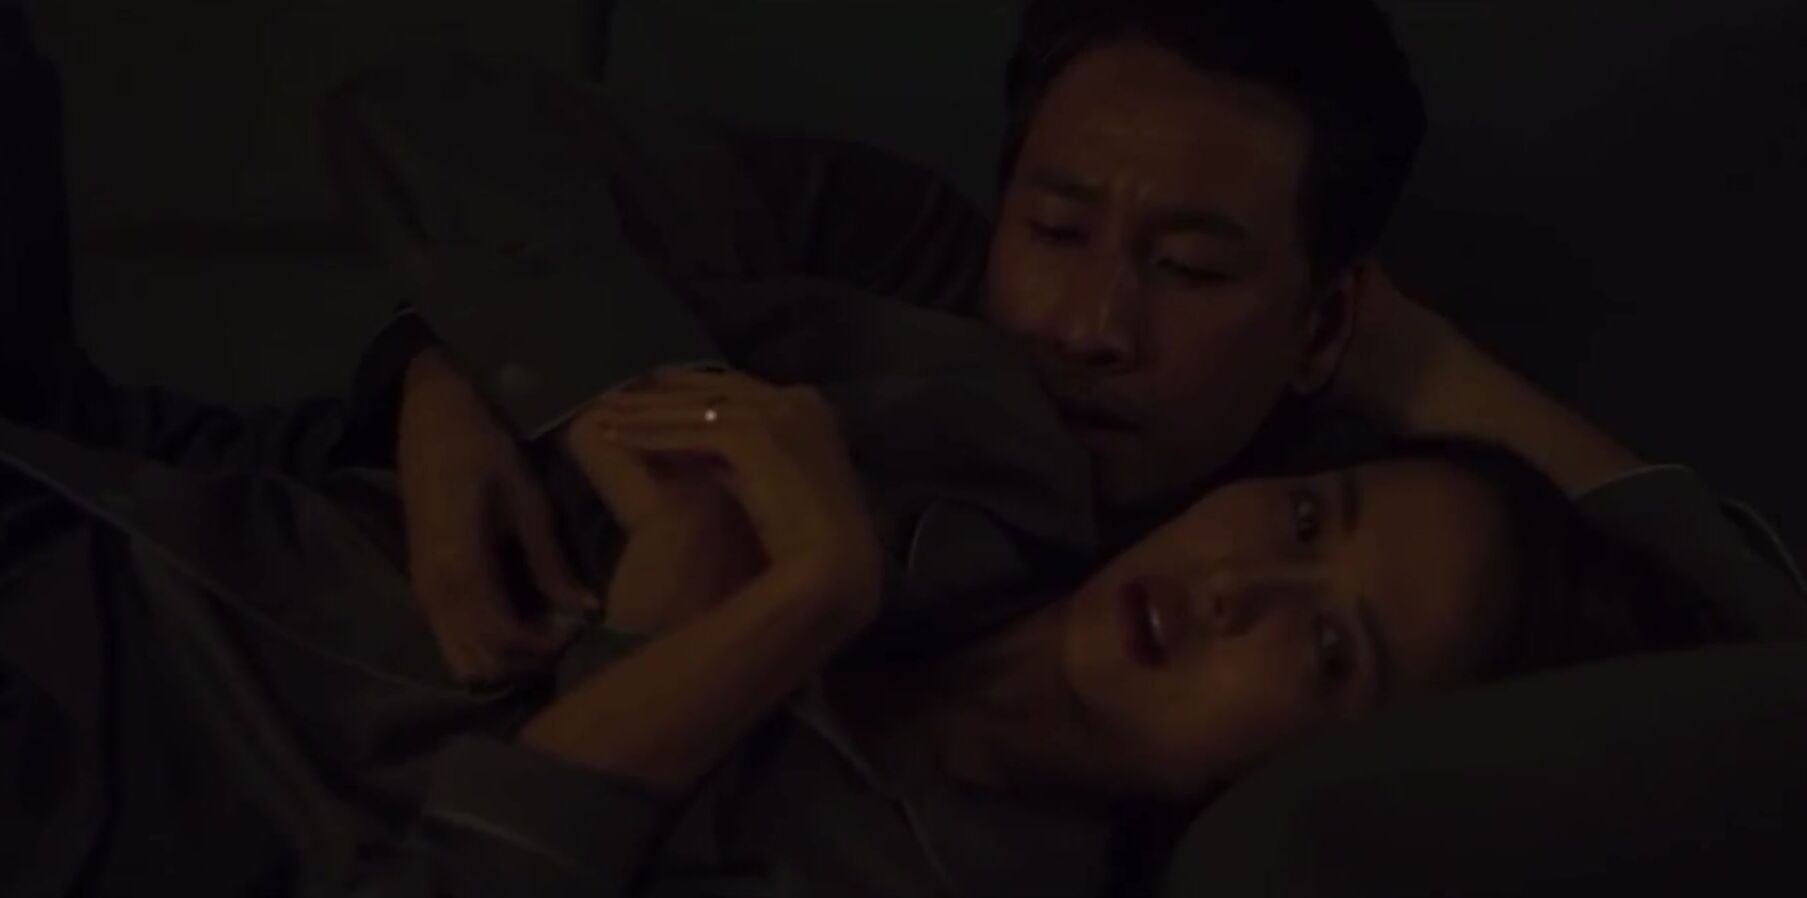 FapVid Korean movie Parasite mutual masturbation explicit moment with Jo Yeo-jeong Naked